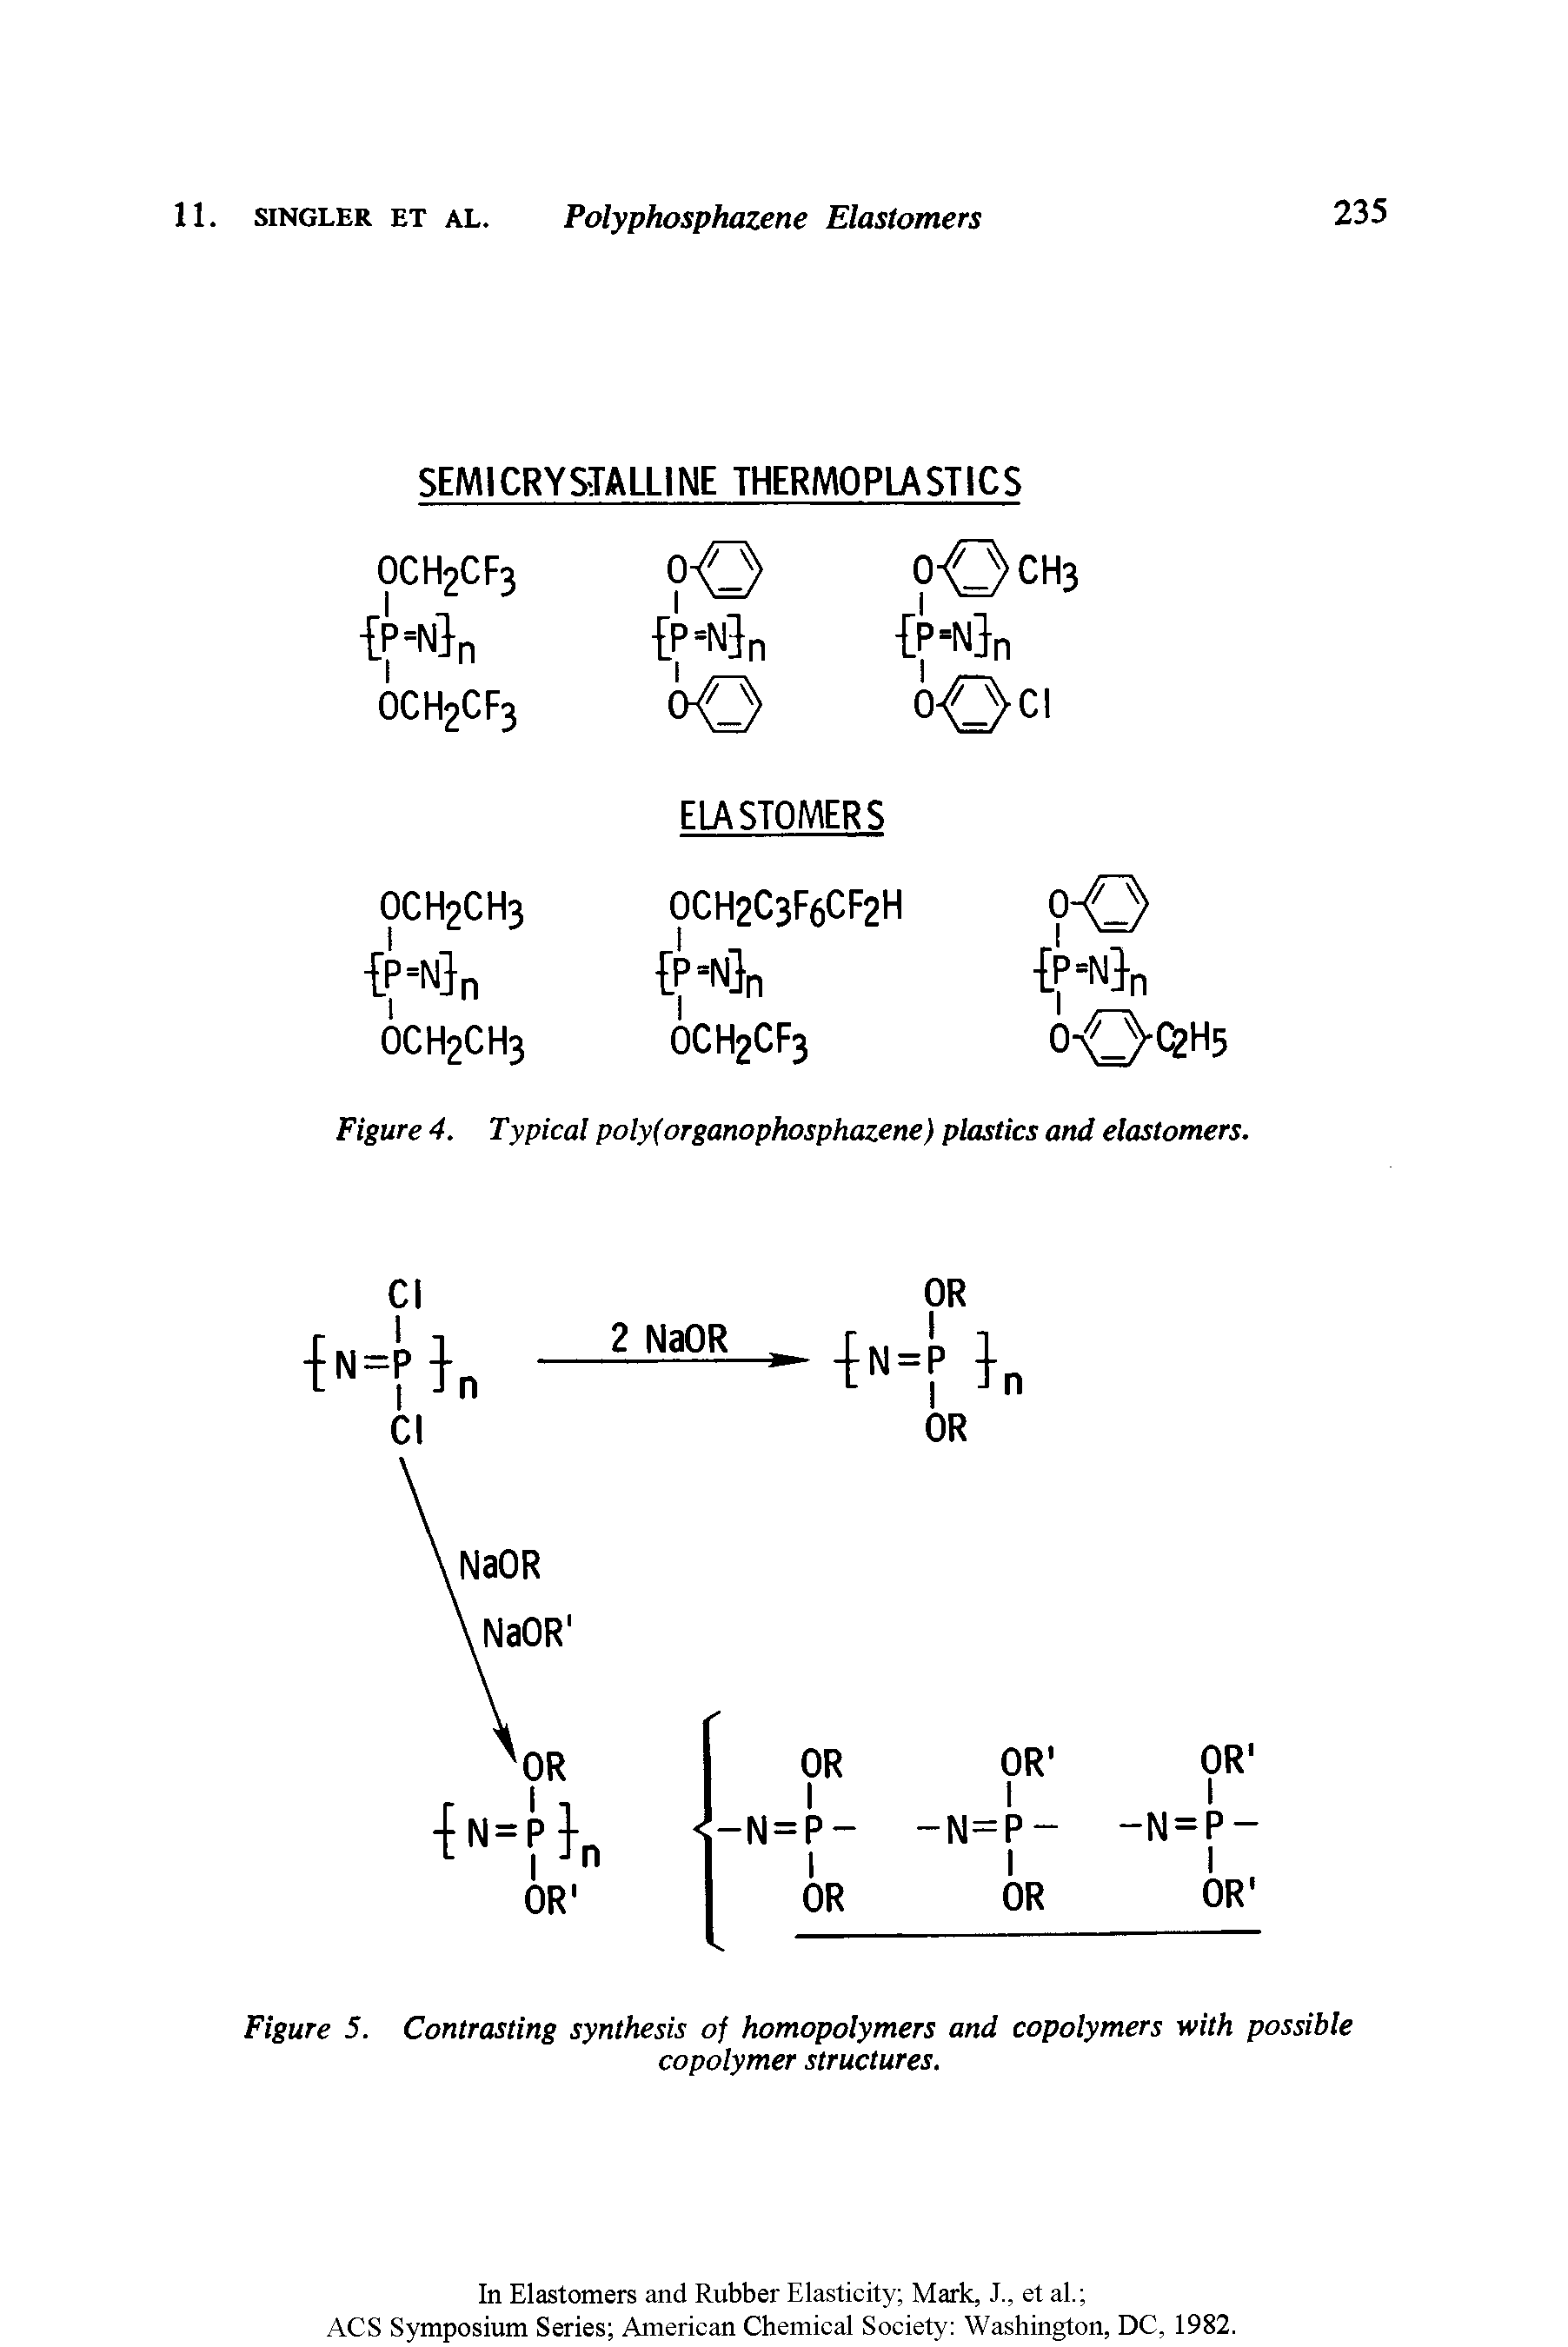 Figure 4. Typical poly(organophosphazene) plastics and elastomers.